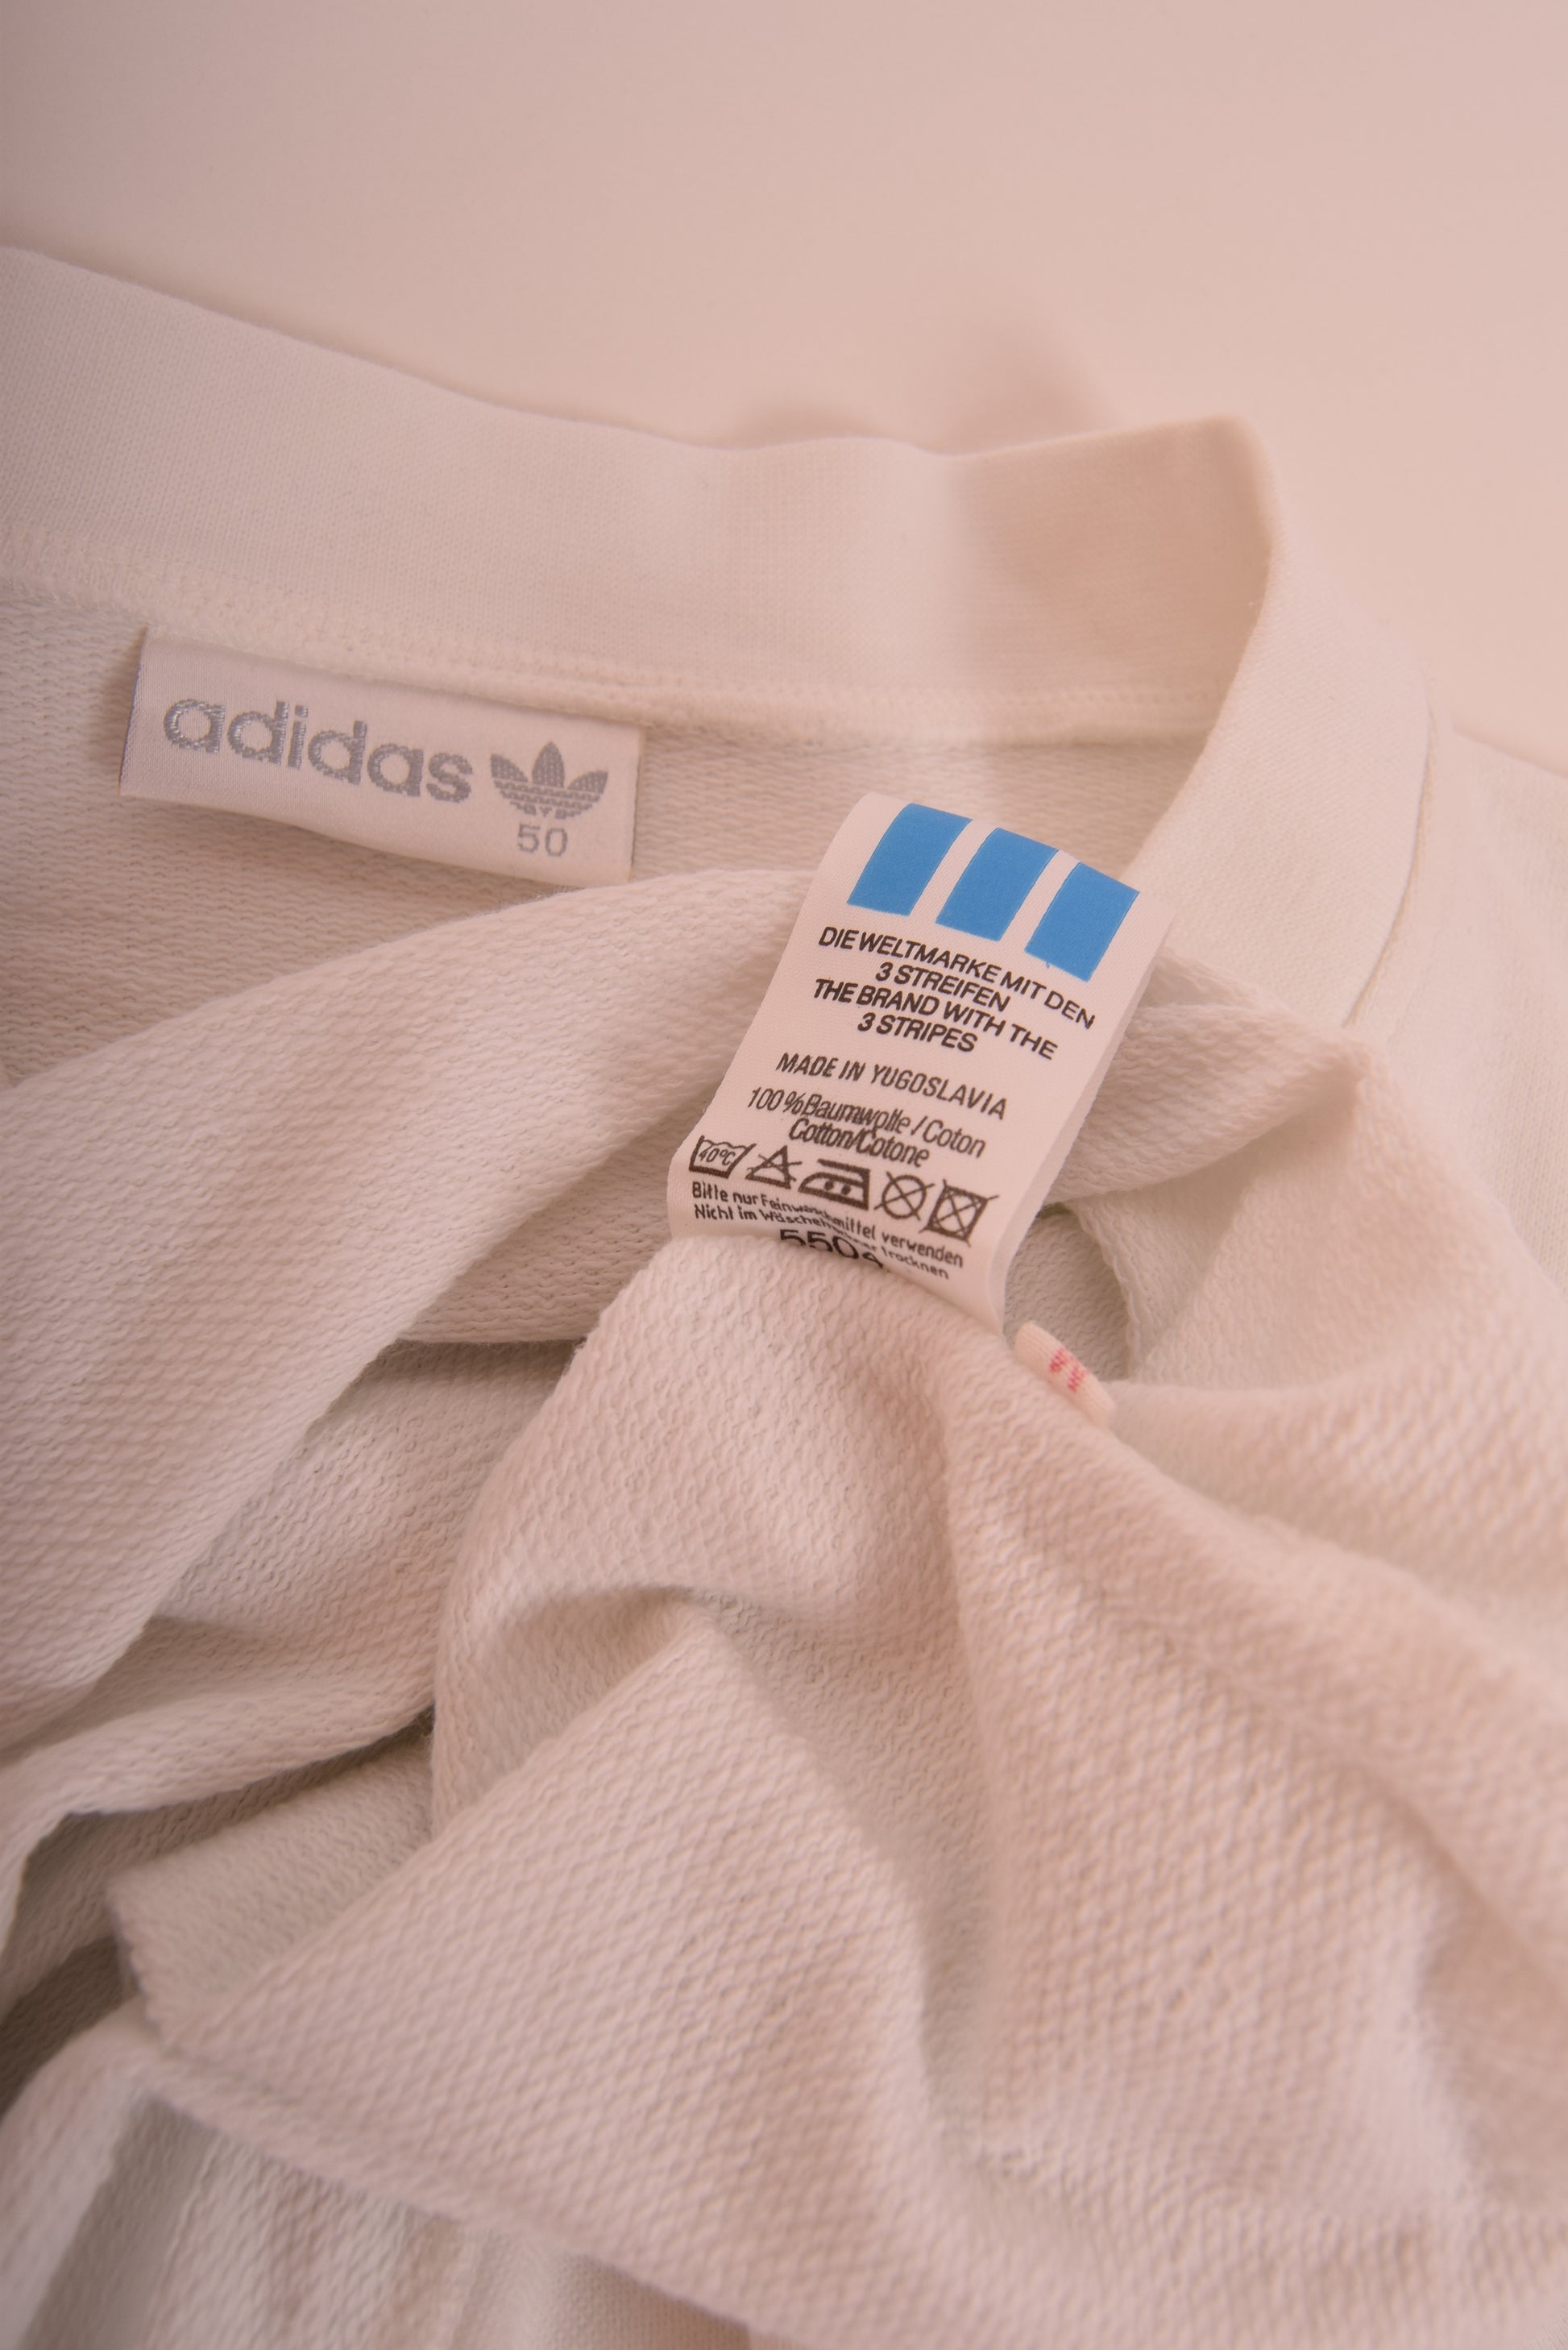 Vintage Adidas Stefan Edberg Sweatshirt 80's Made in Yugoslavia Size M White